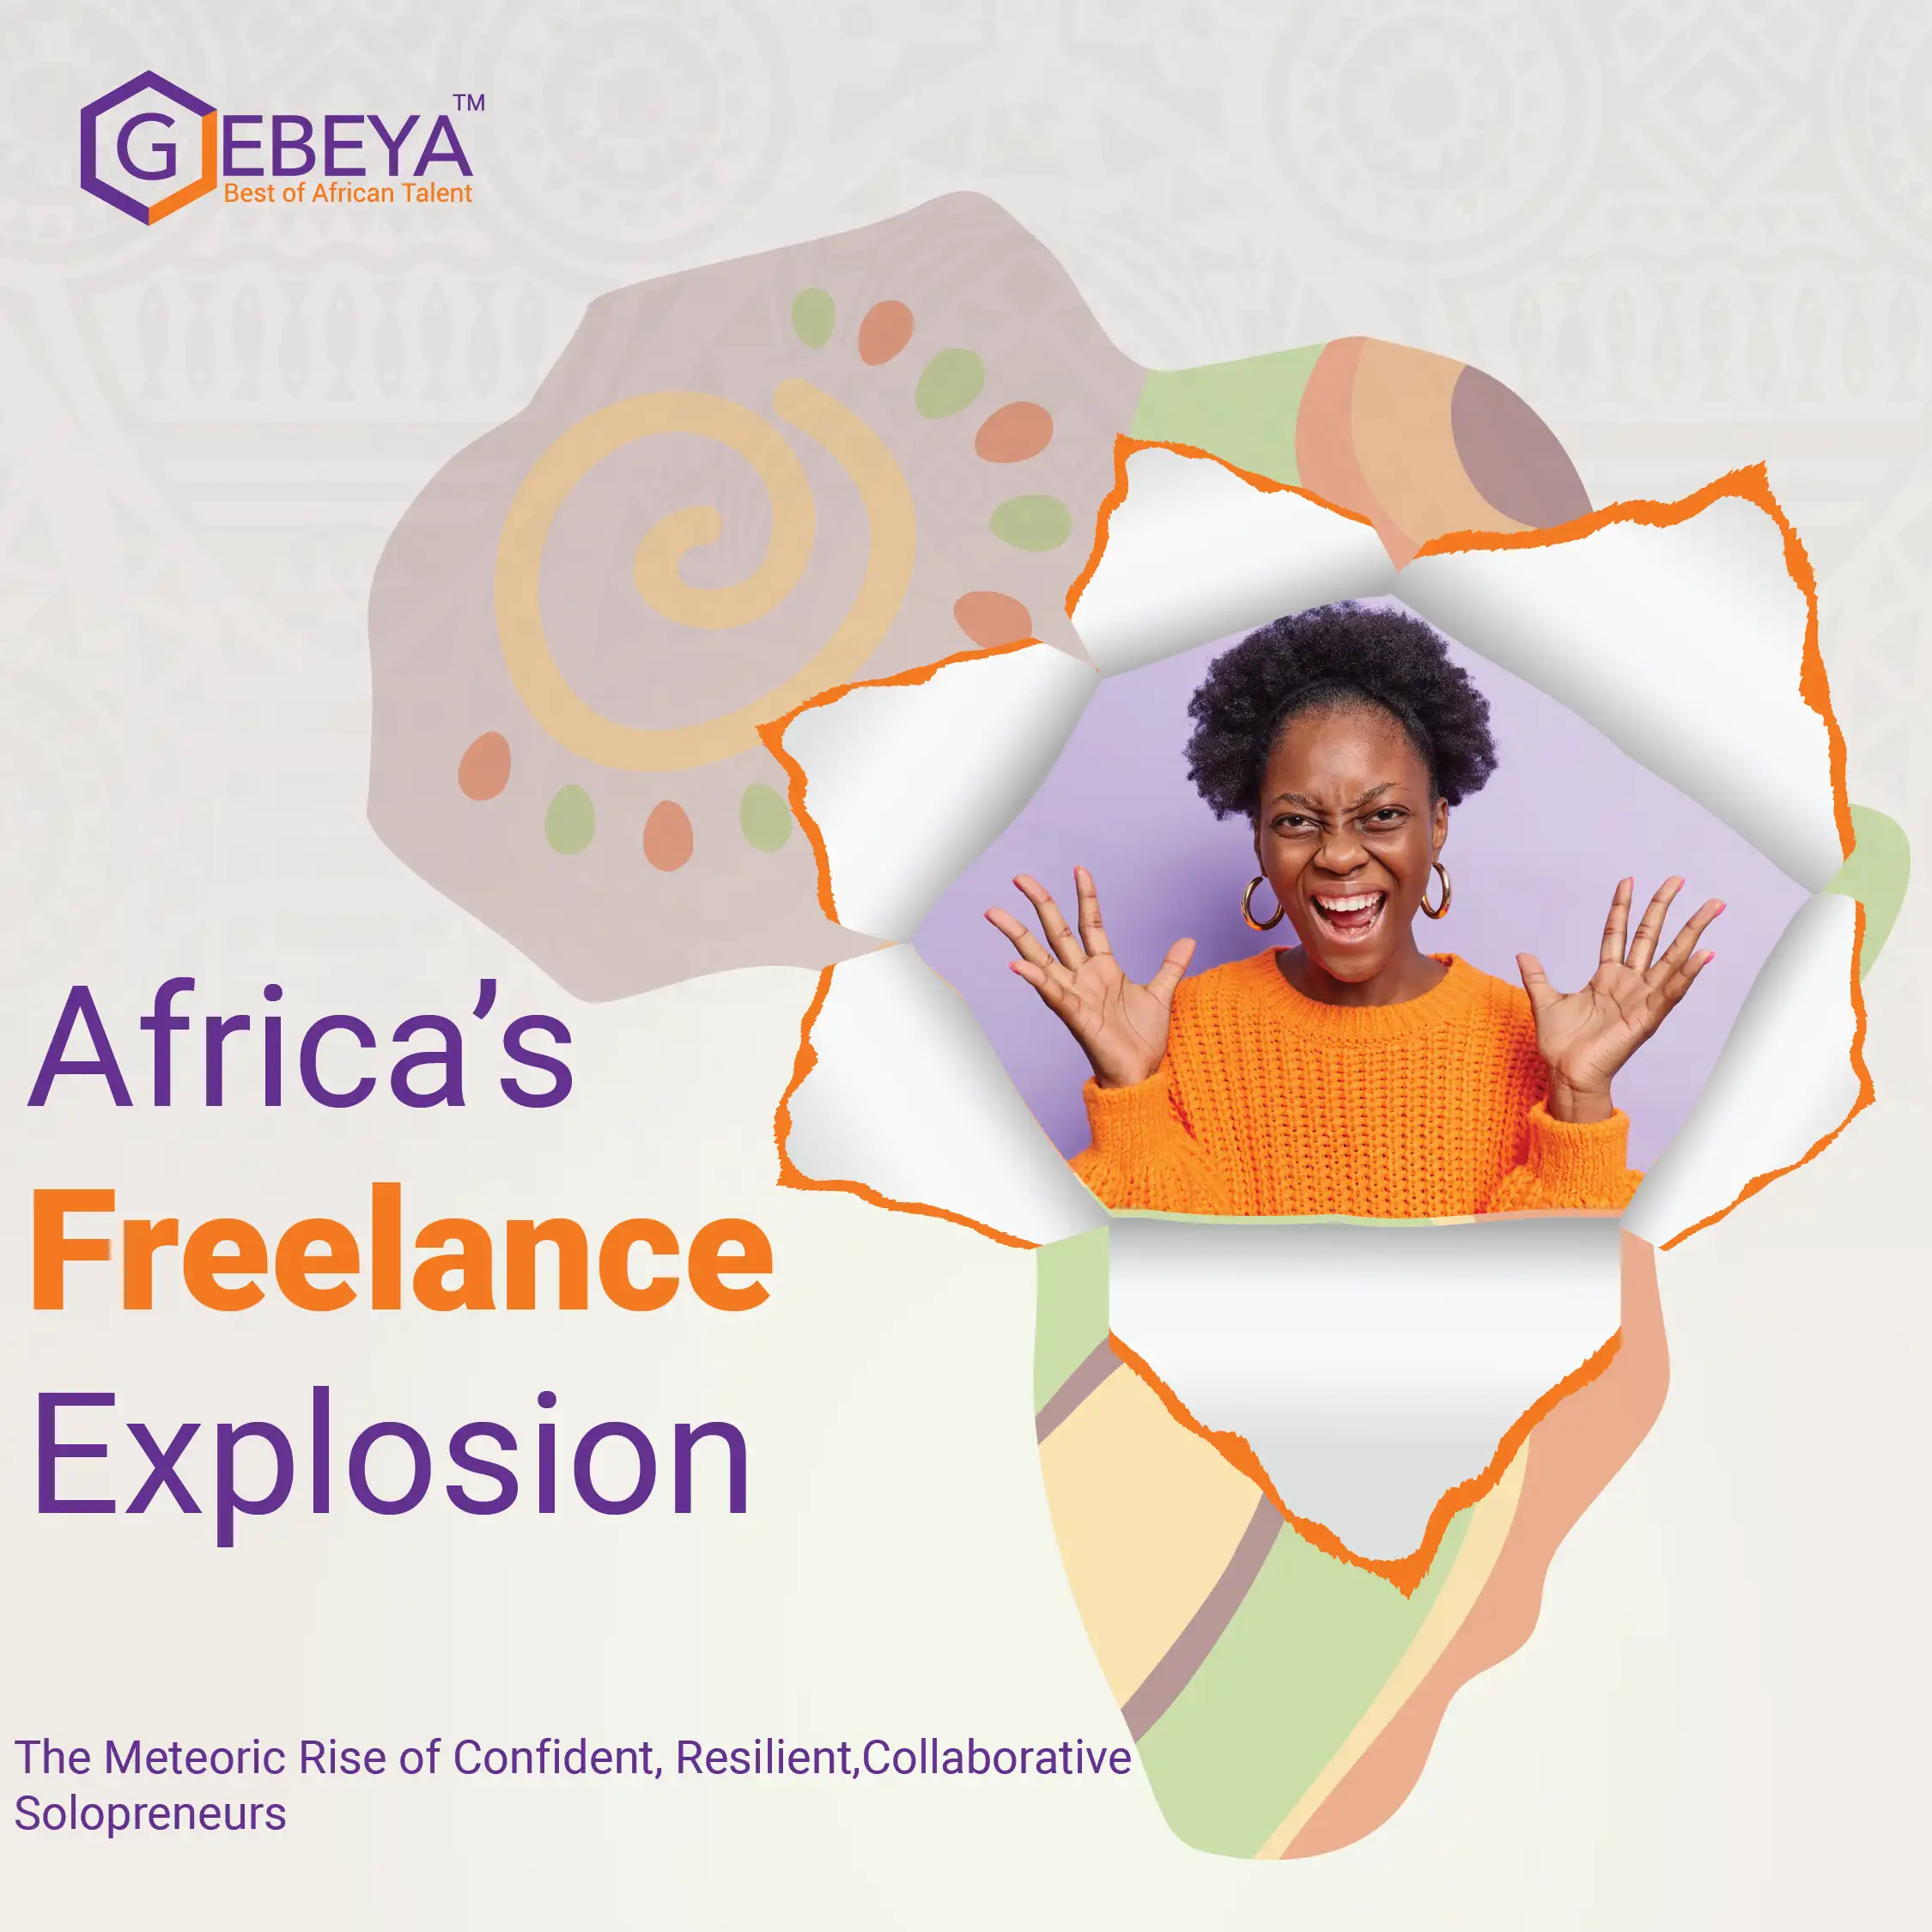 africas freelance software developers